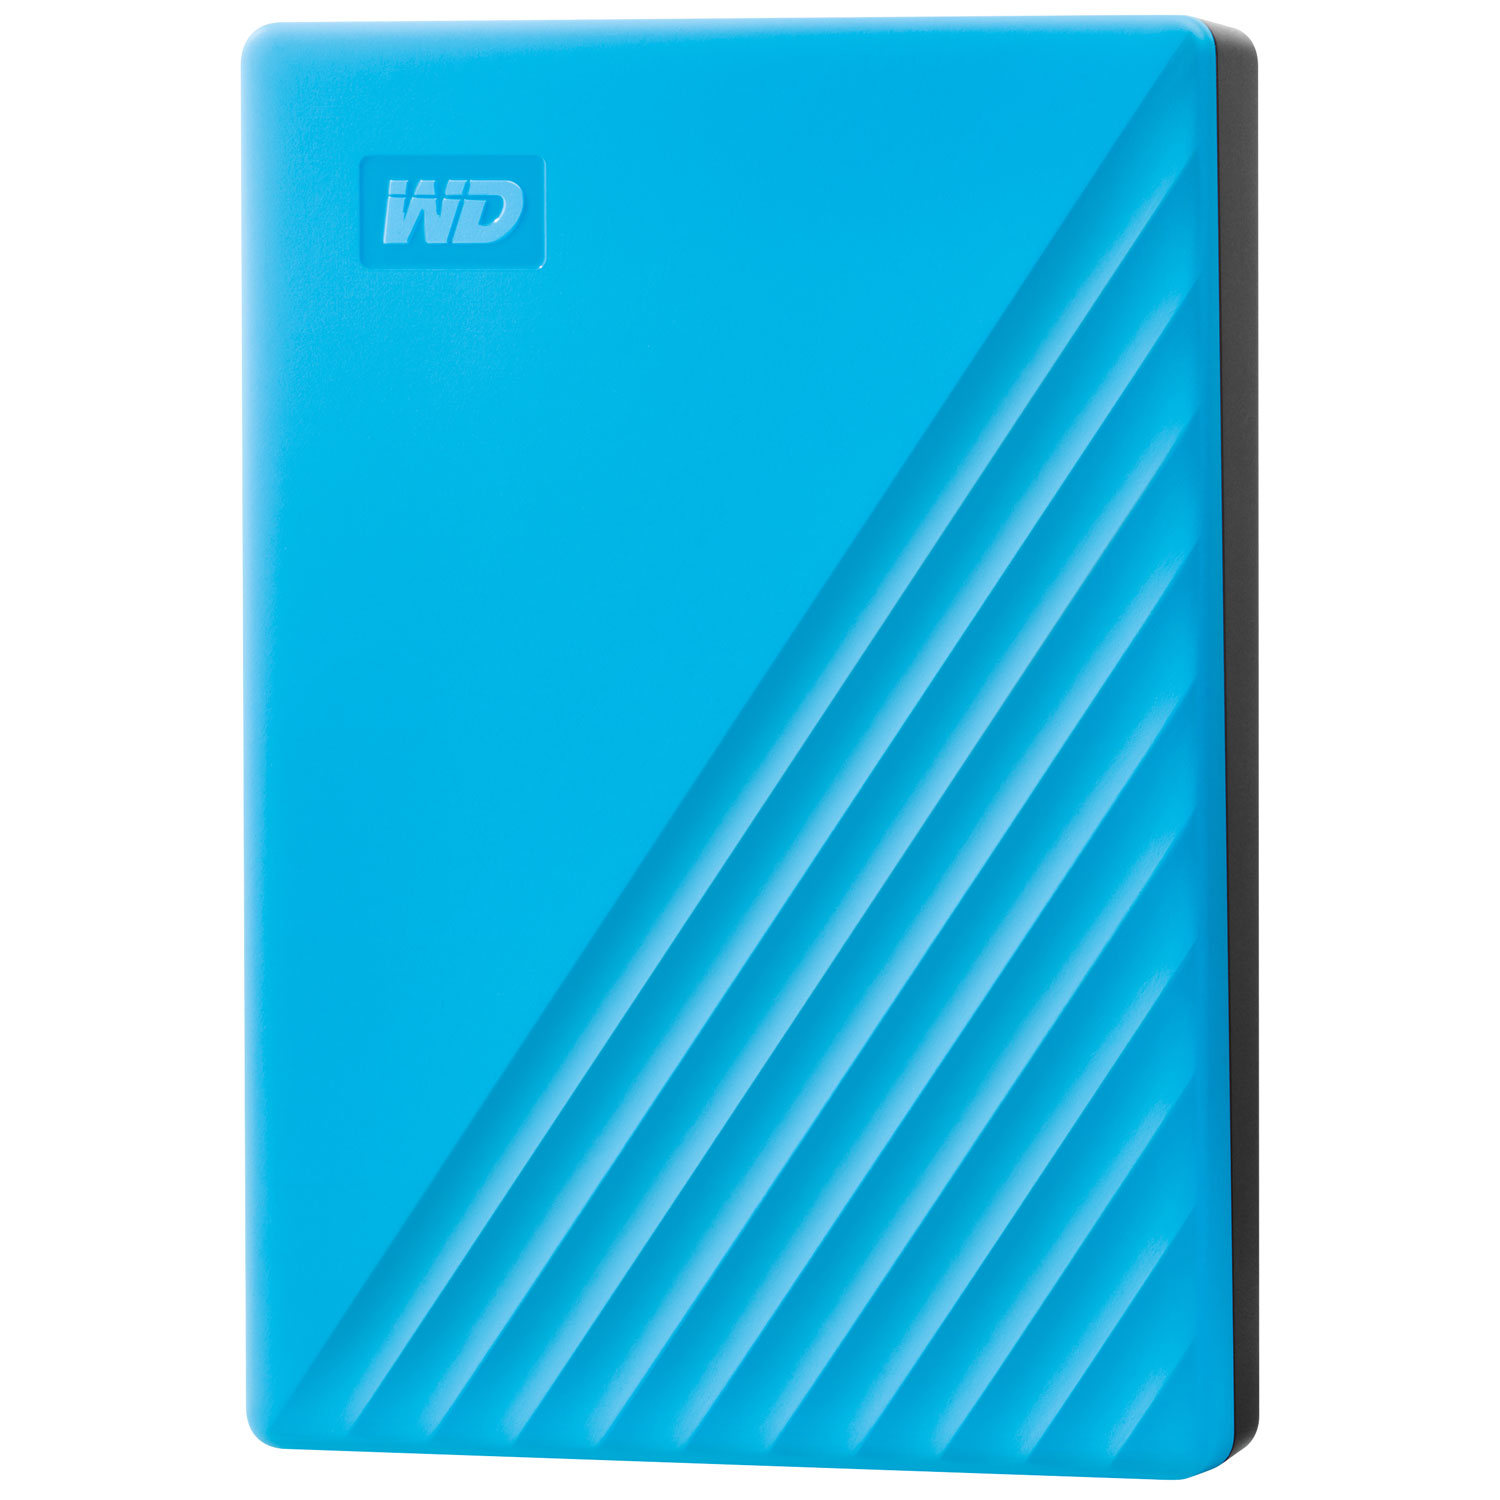 WD My Passport 5TB USB Portable External Hard Drive (WDBPKJ0050BBL-WESN) - Blue - Only at Best Buy